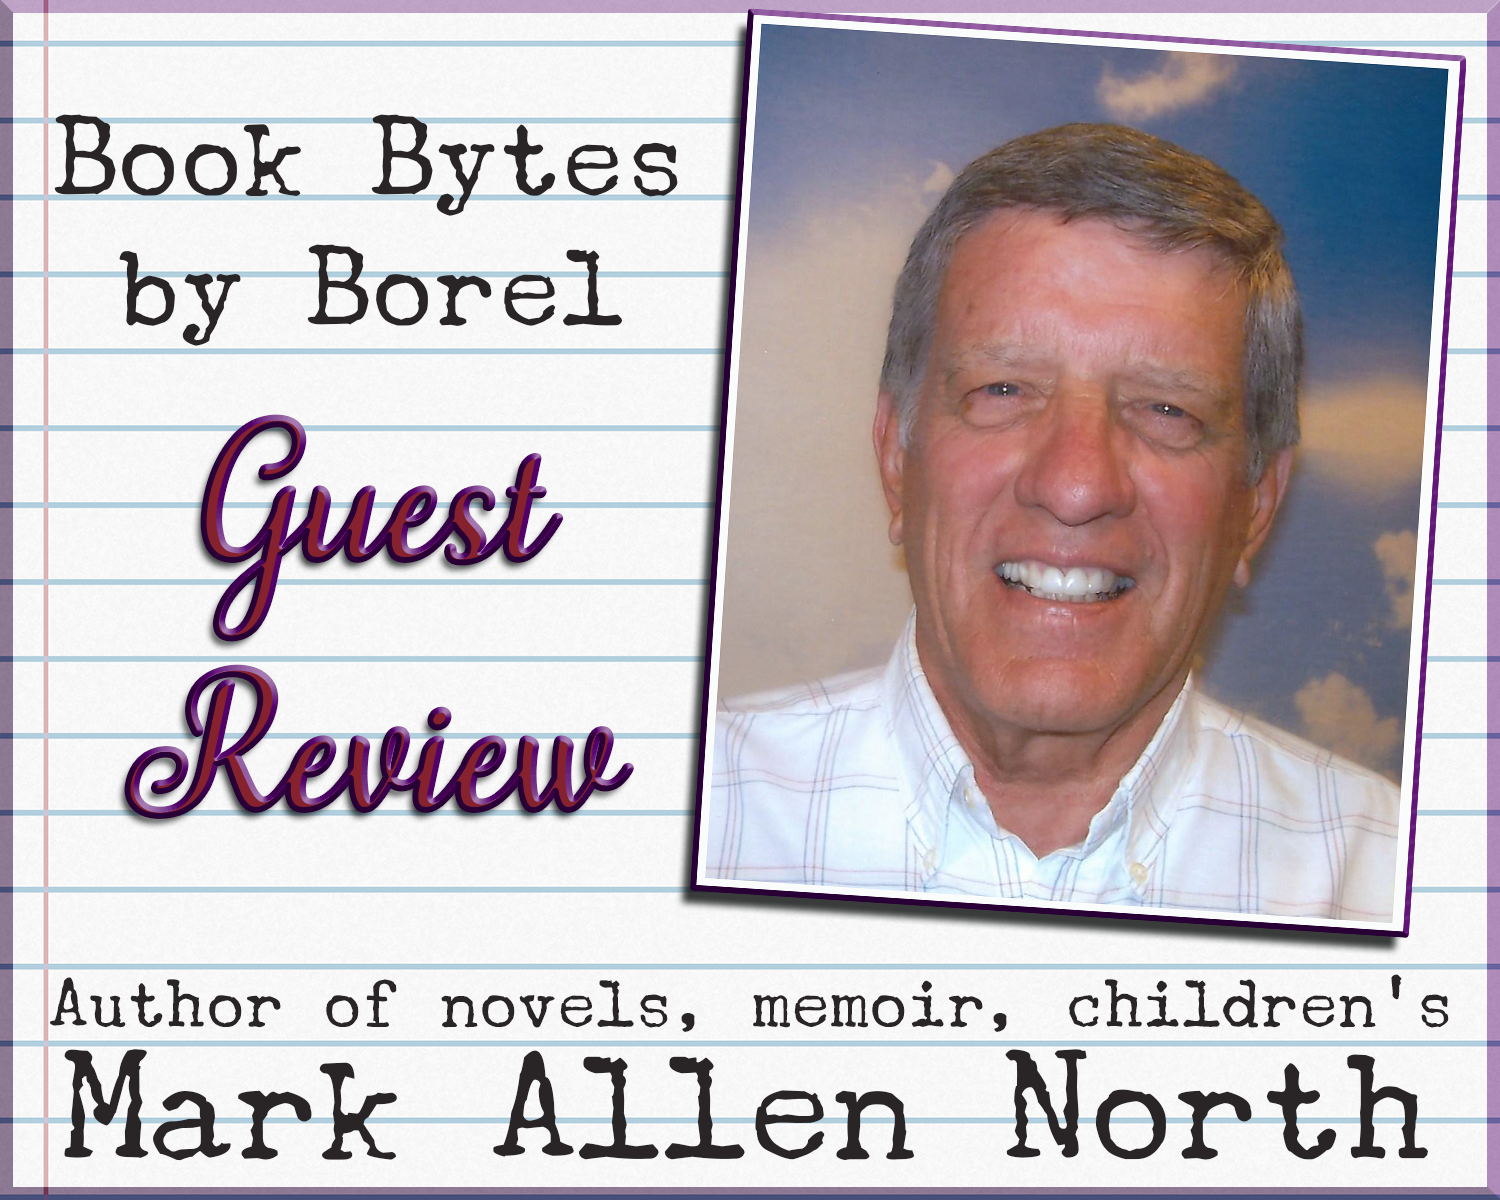 Borel Guest Review, Mark Allen North